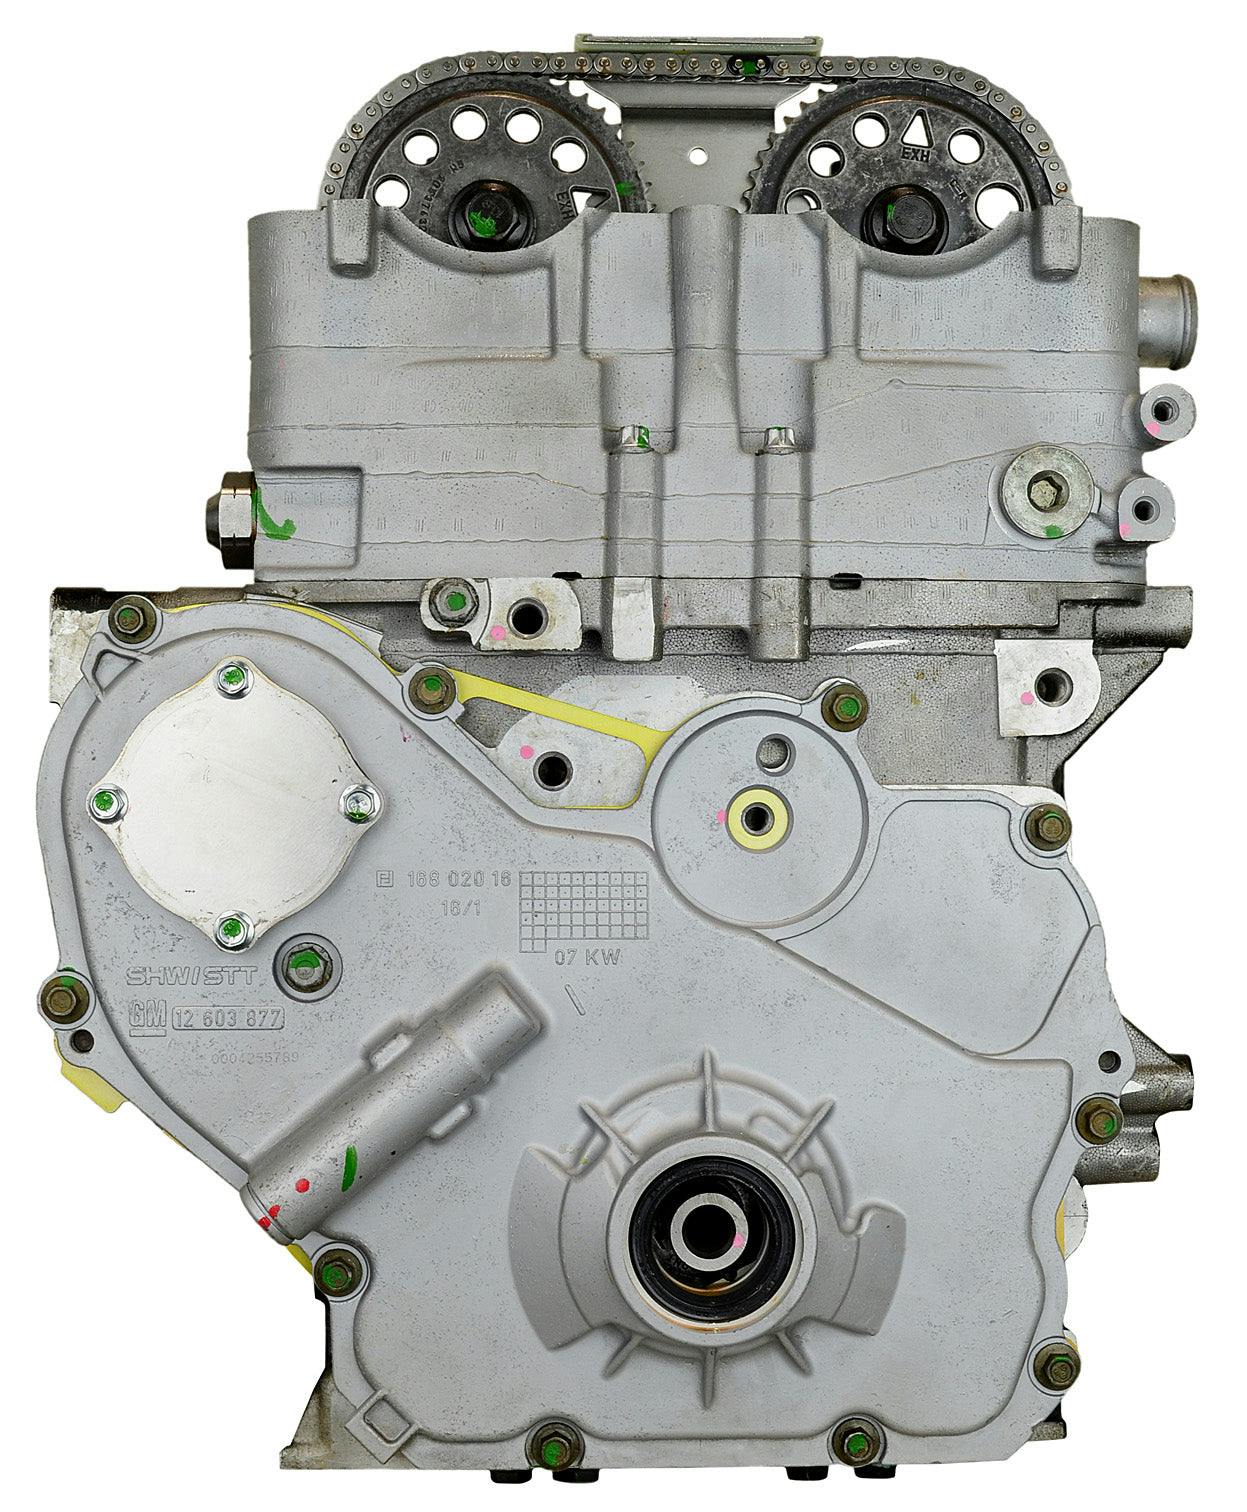 2.2L Inline-4 Engine for 2007-2008 Chevrolet Cobalt, HHR, Malibu/Pontiac G5/Saturn Ion